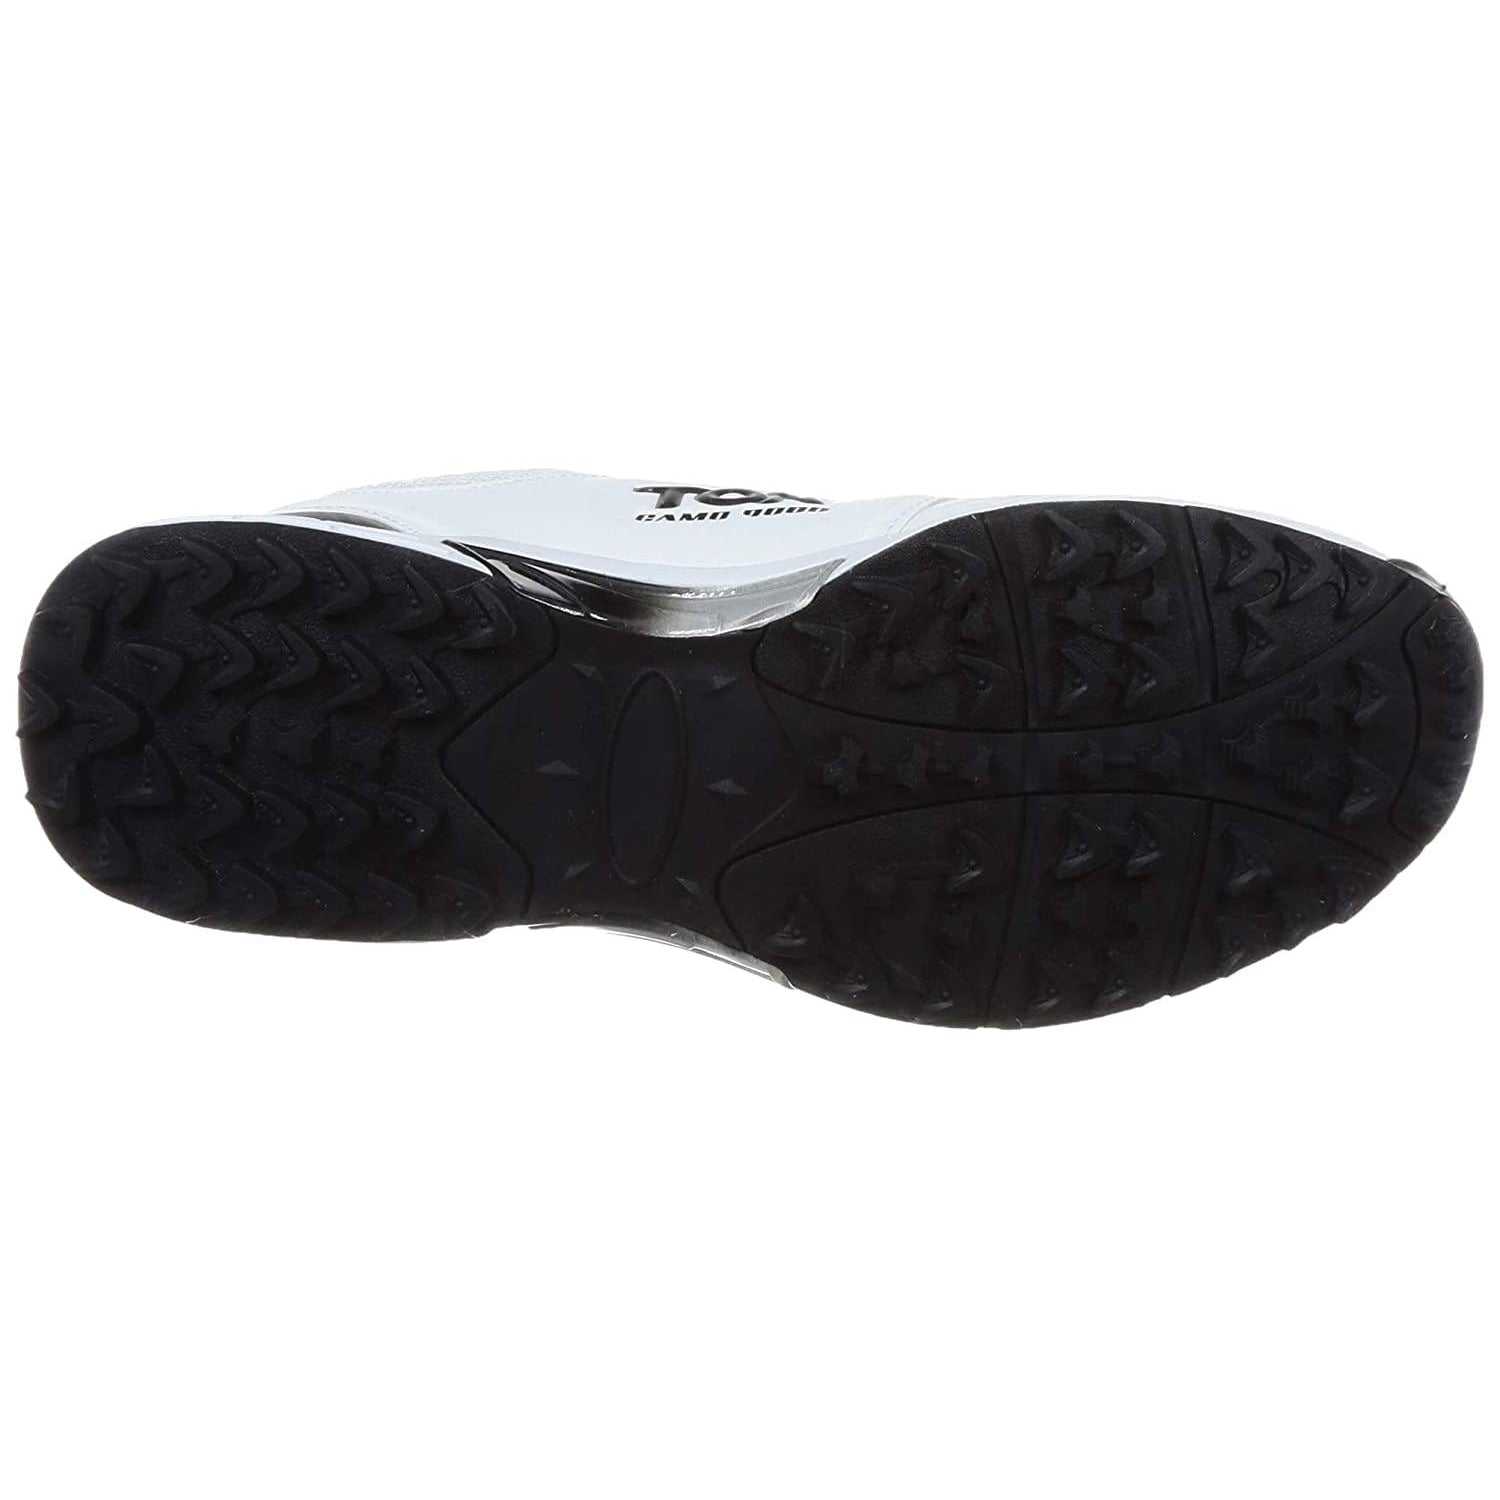 SS Camo 9000 Cricket Shoes Black/White - Best Price online Prokicksports.com